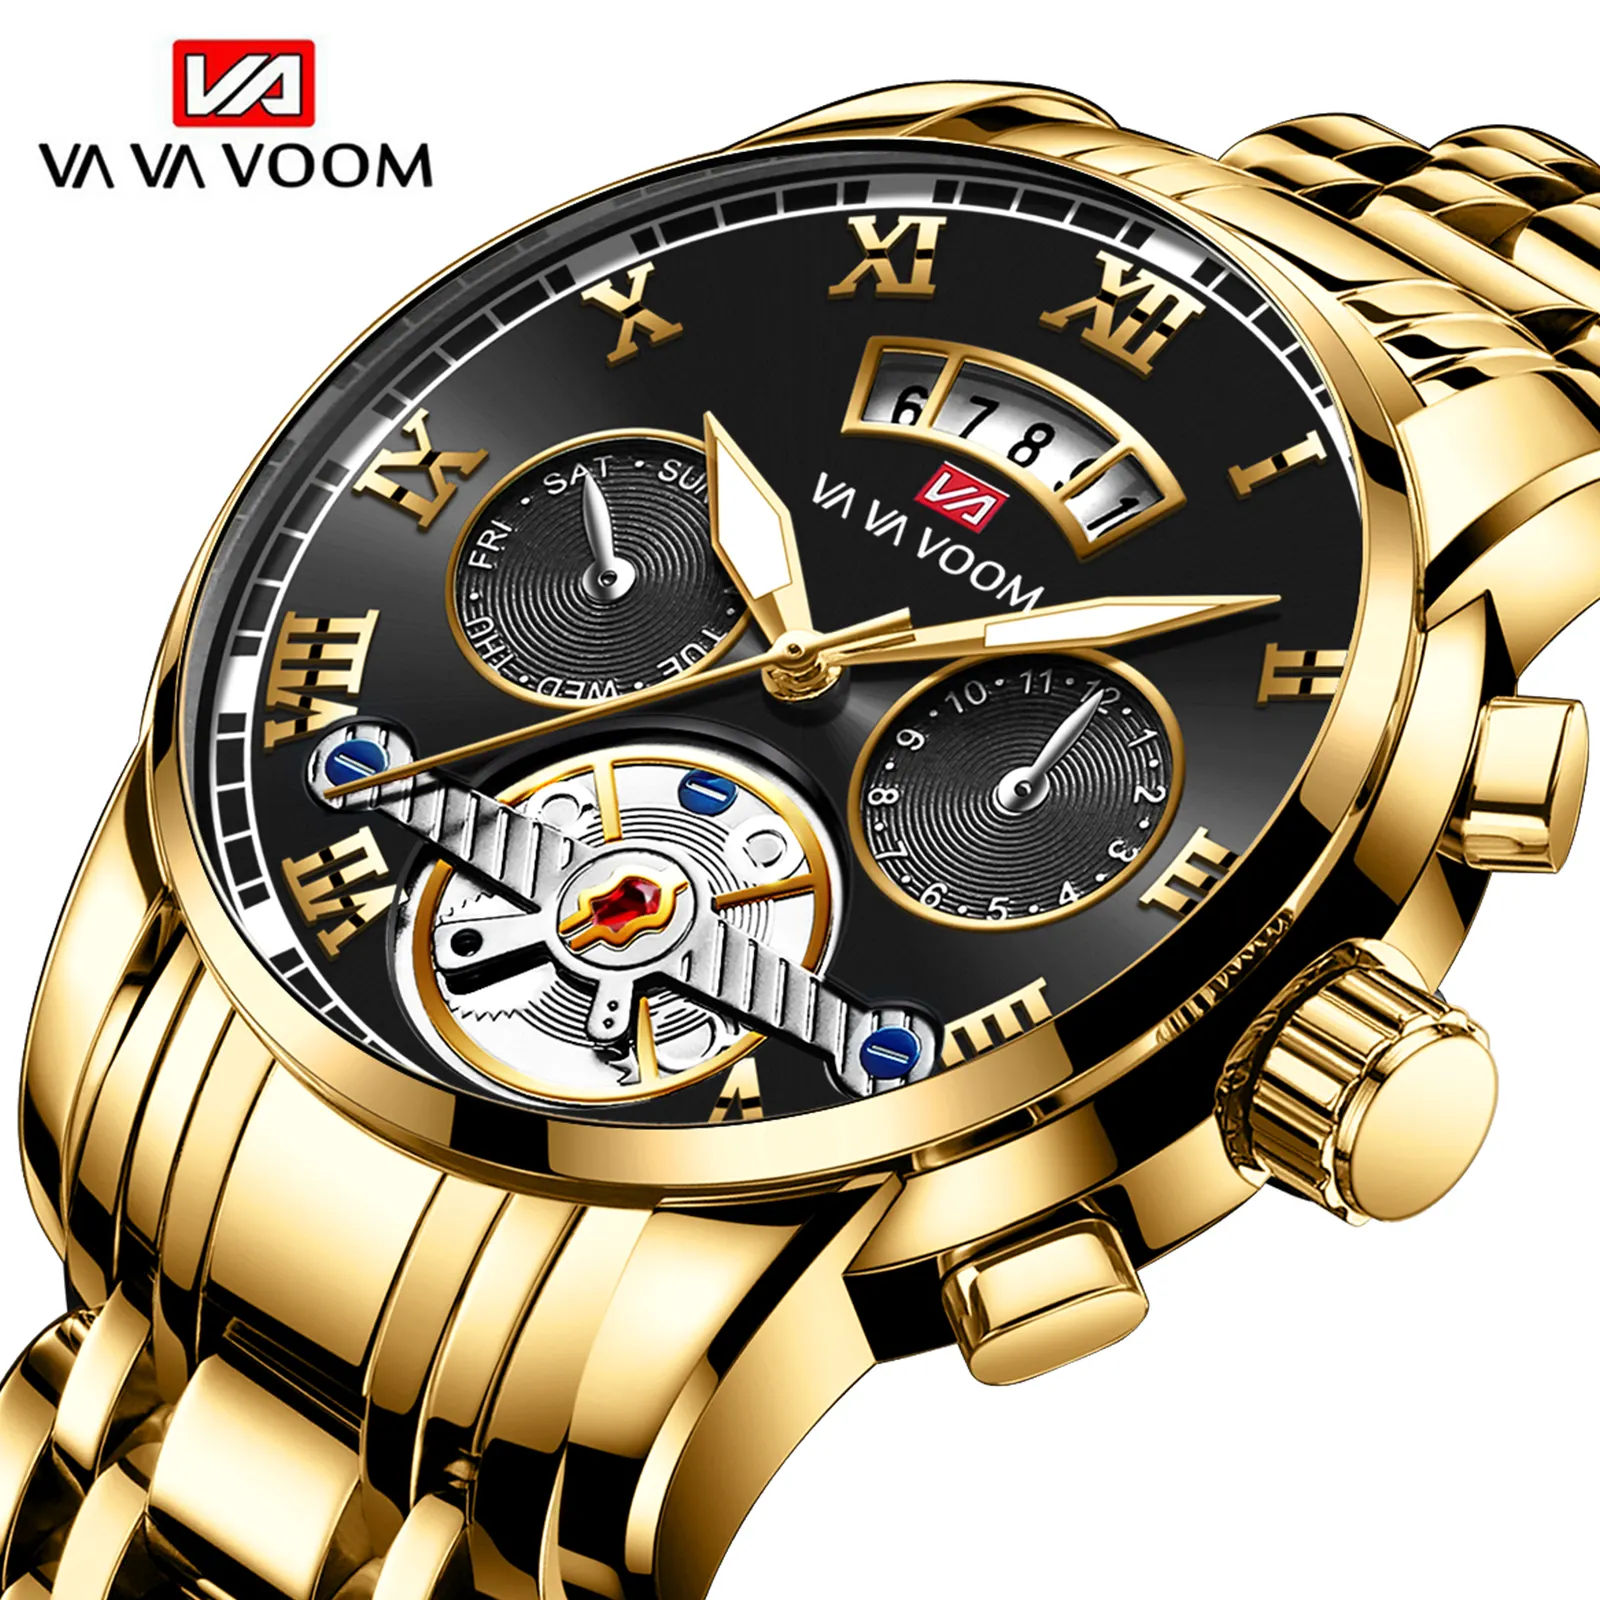 VAVA VOOM 2453 Relogio Masculino Top Brand Mens Luxury Watch Clock Imitate Automatic Multifunctional Waterproof Sports Watches